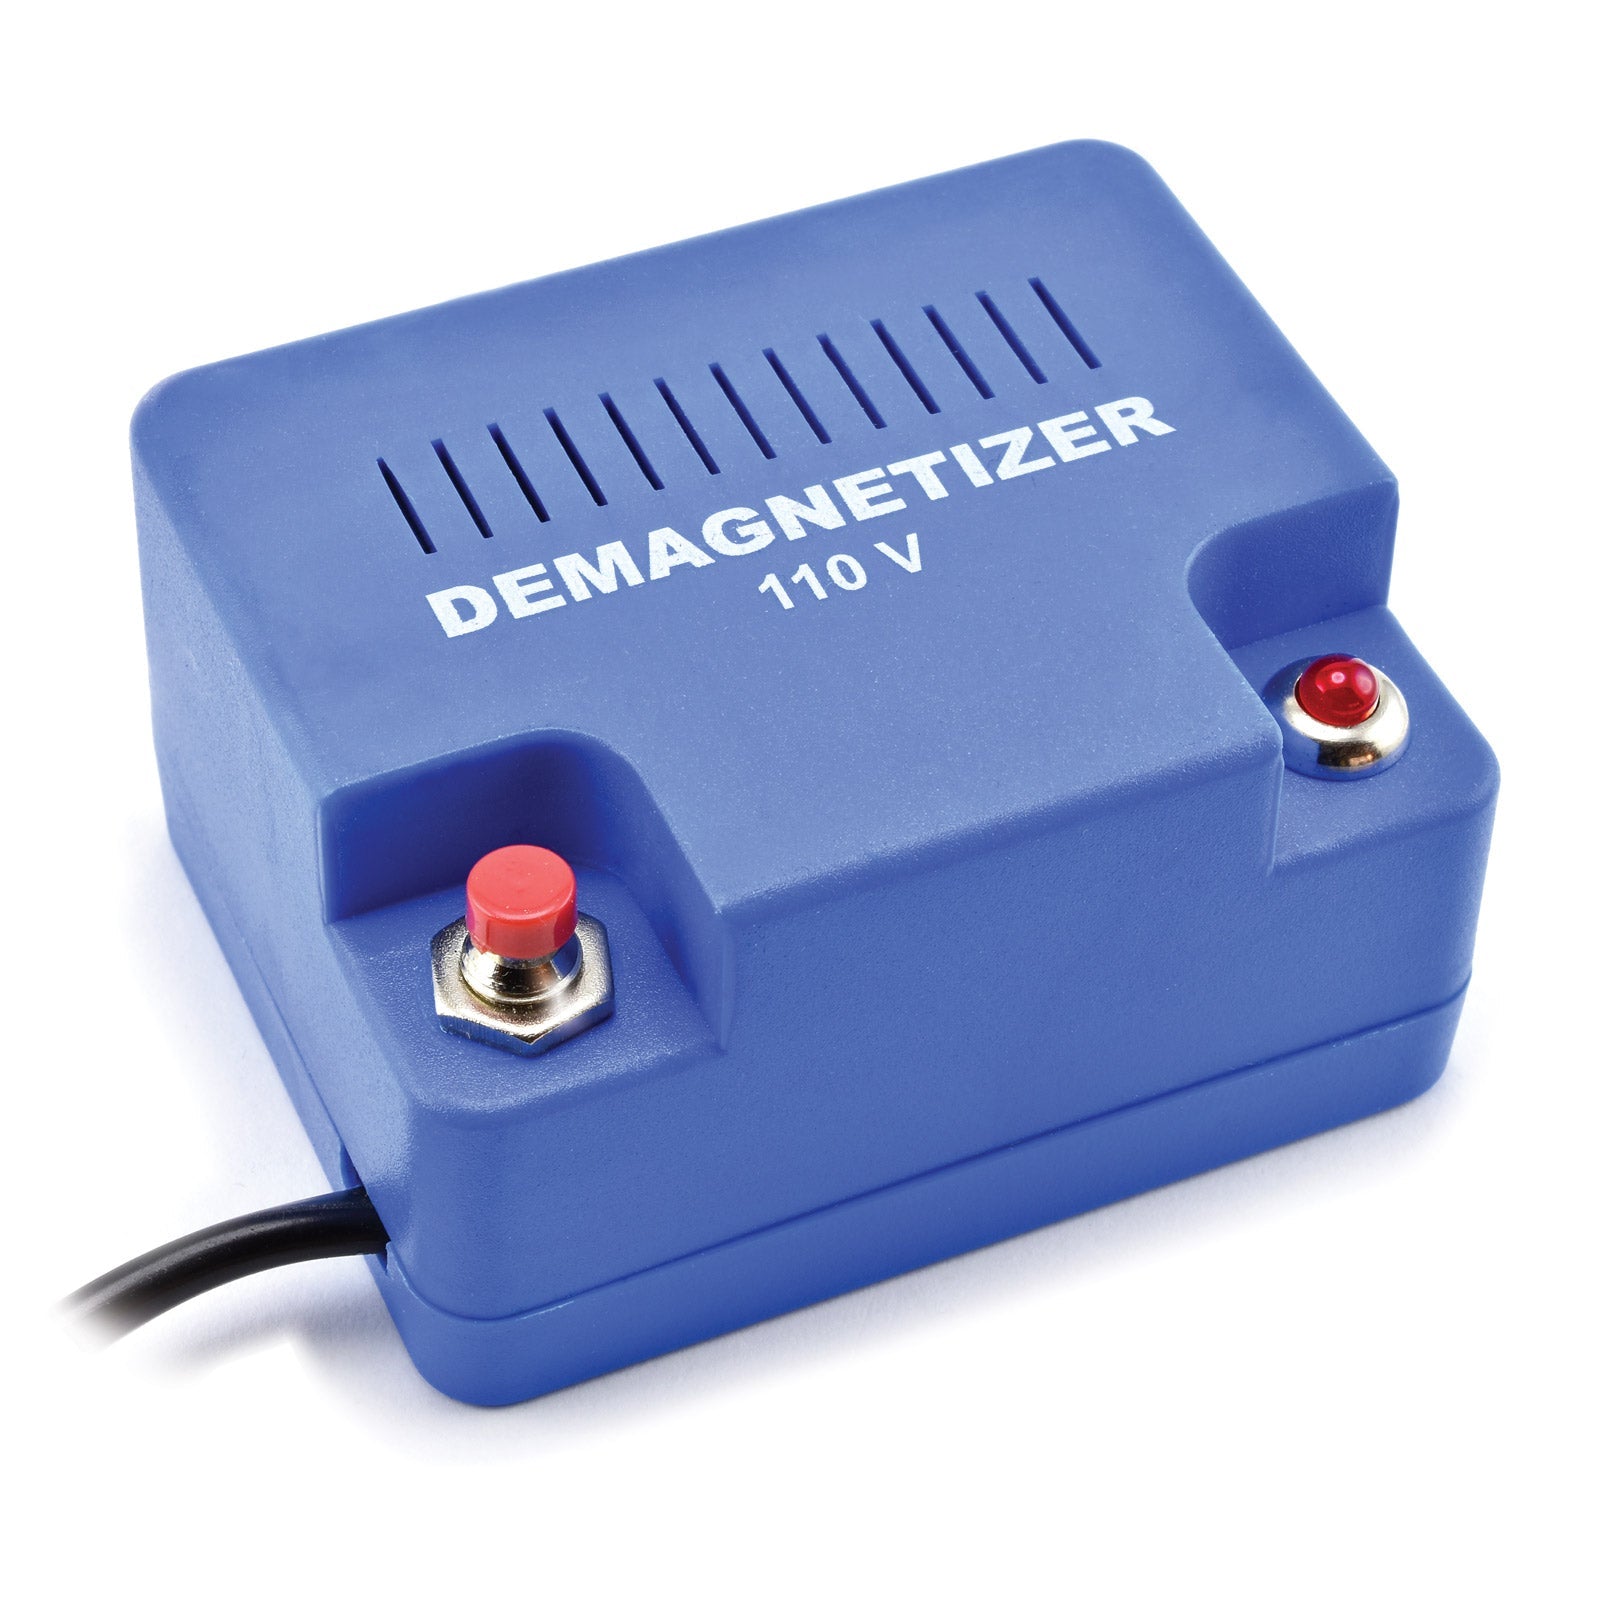 Electronic Demagnetizer, 110VAC - Micro - Mark Screwdrivers